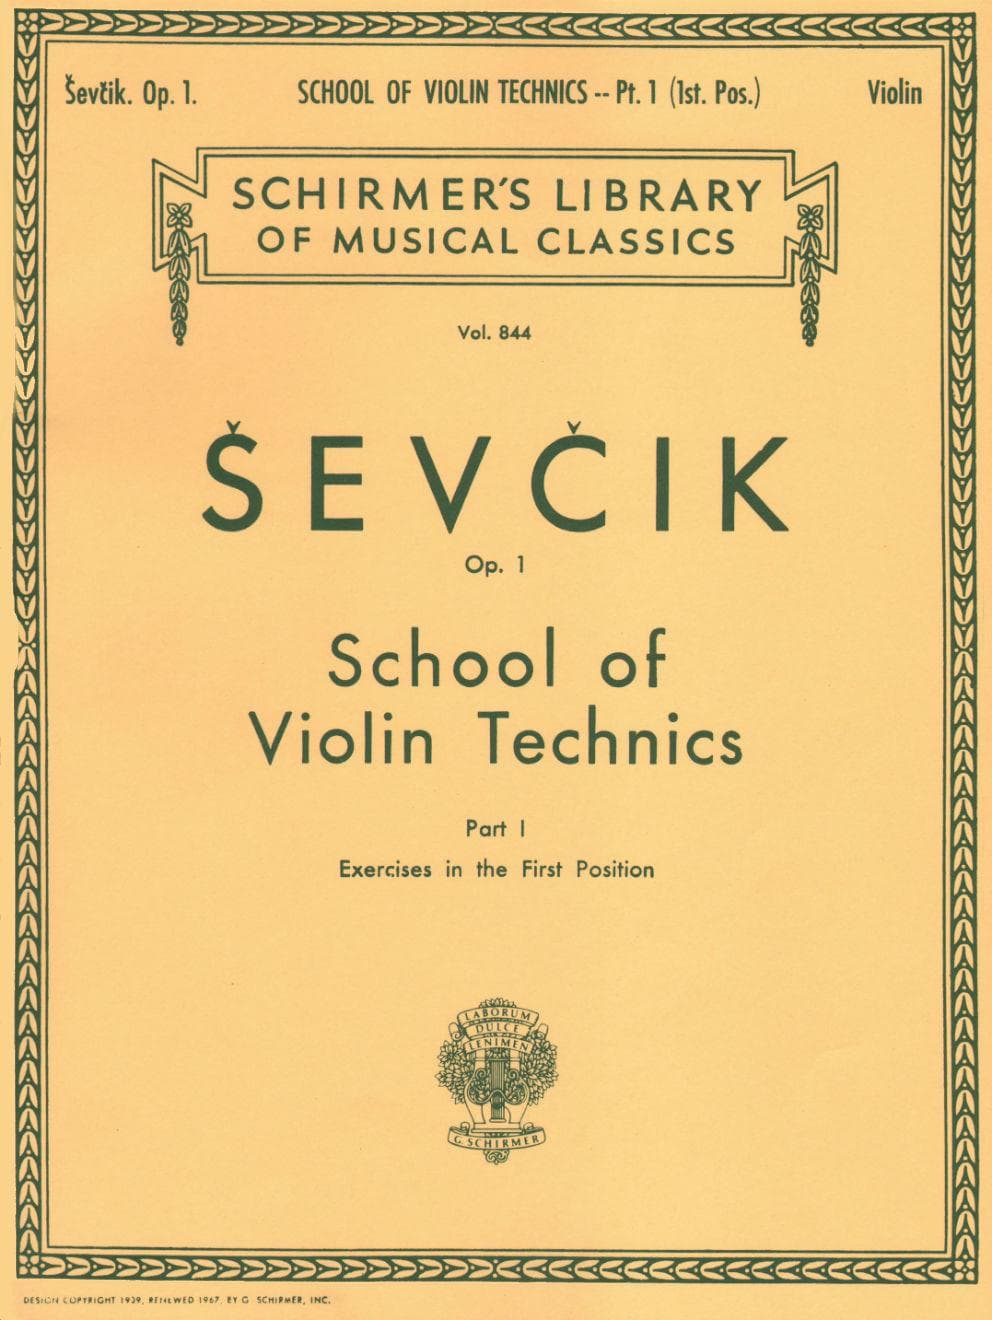 Sevcik, Otakar - School of Violin Technique, Op 1, Part 1 - for Violin - G Schirmer